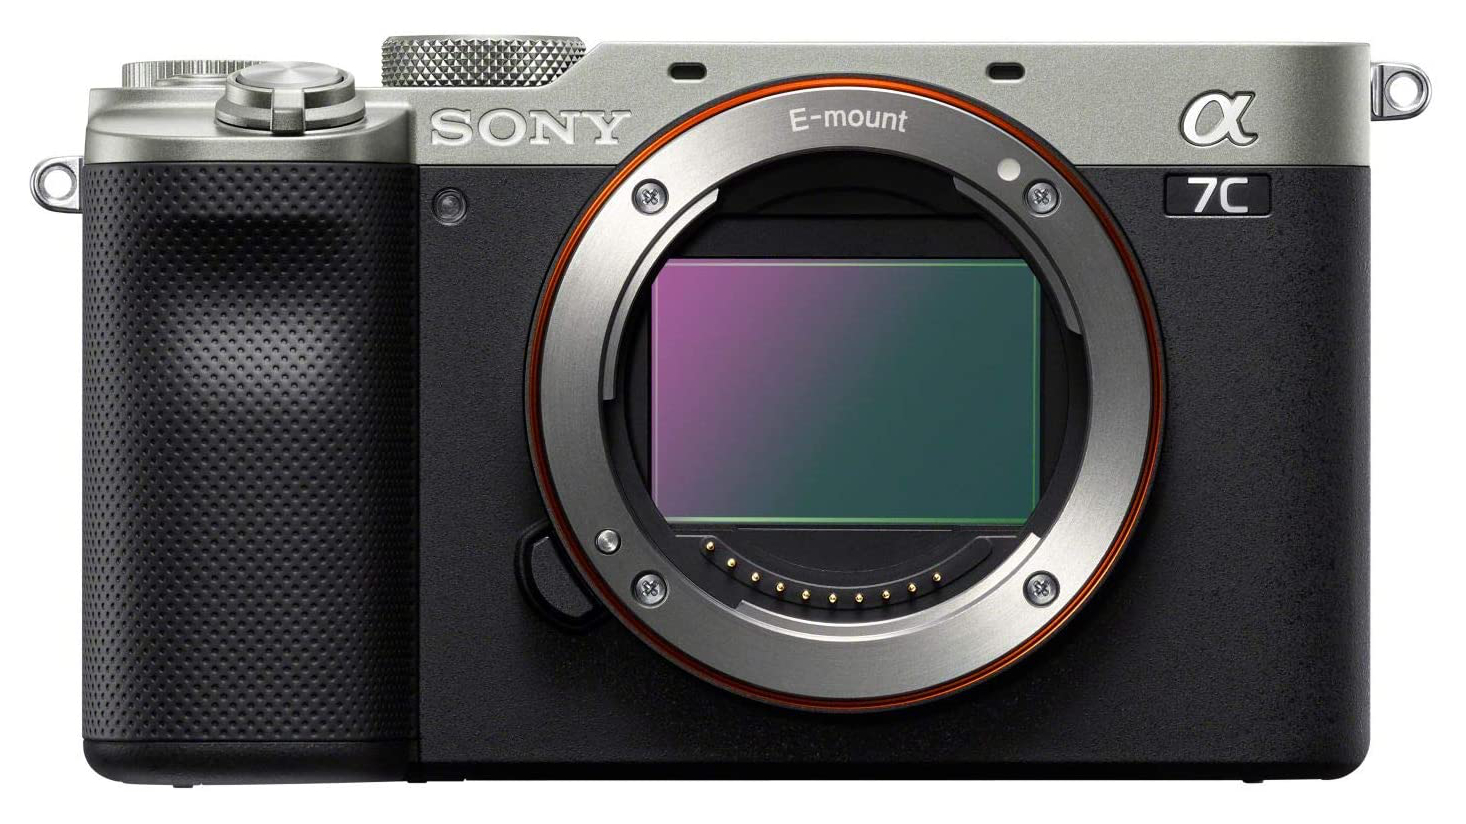 Sony A7C mirrorless camera